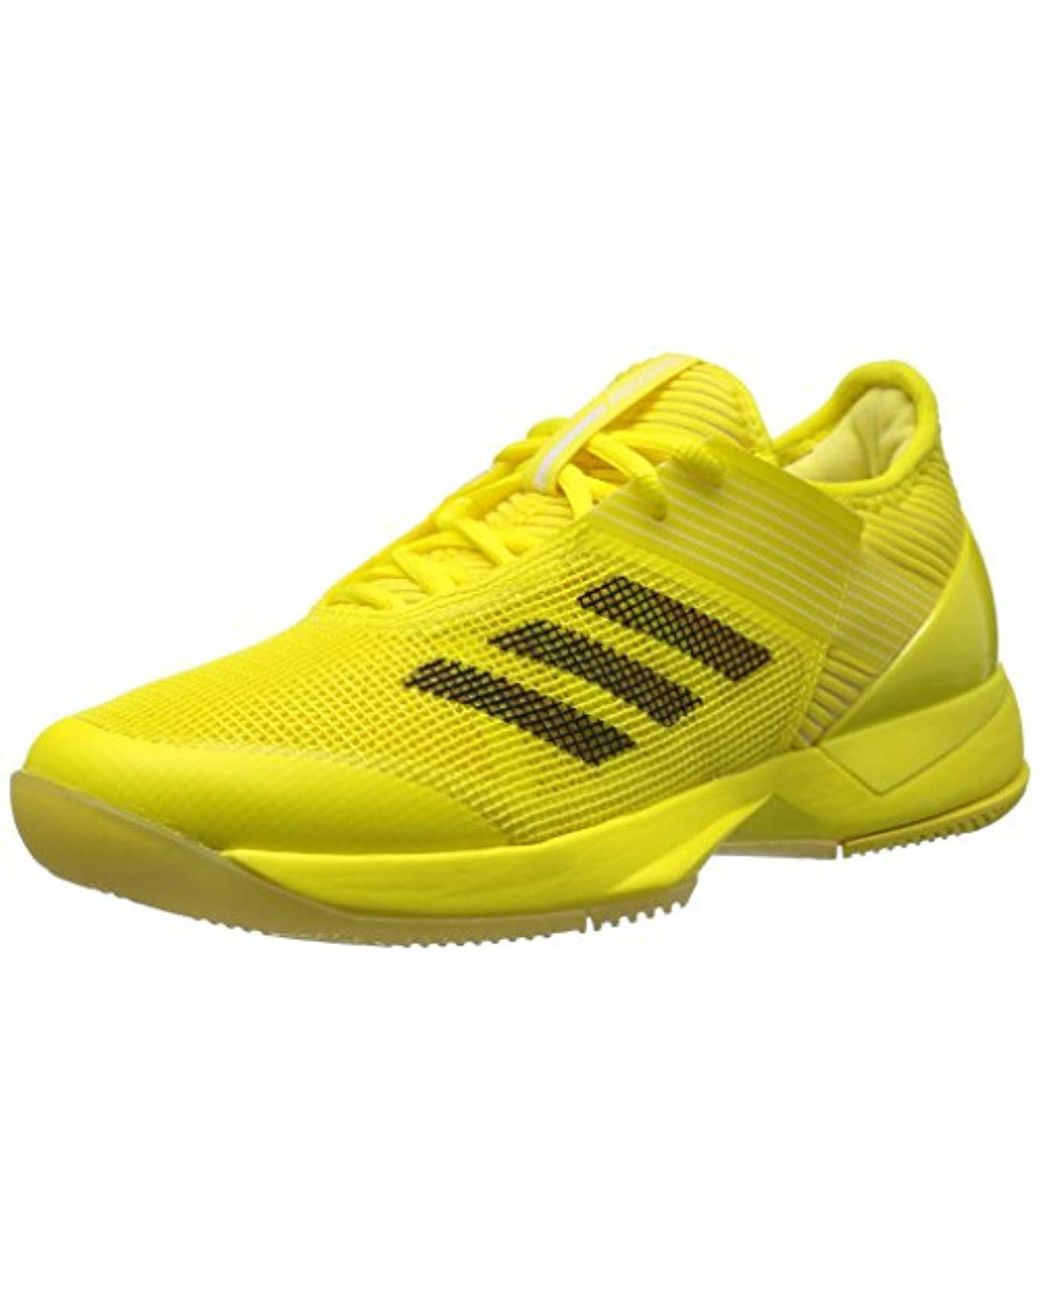 Adidas Adizero Ubersonic 3 Pharrell Williams Red Blue Yellow - Size 6